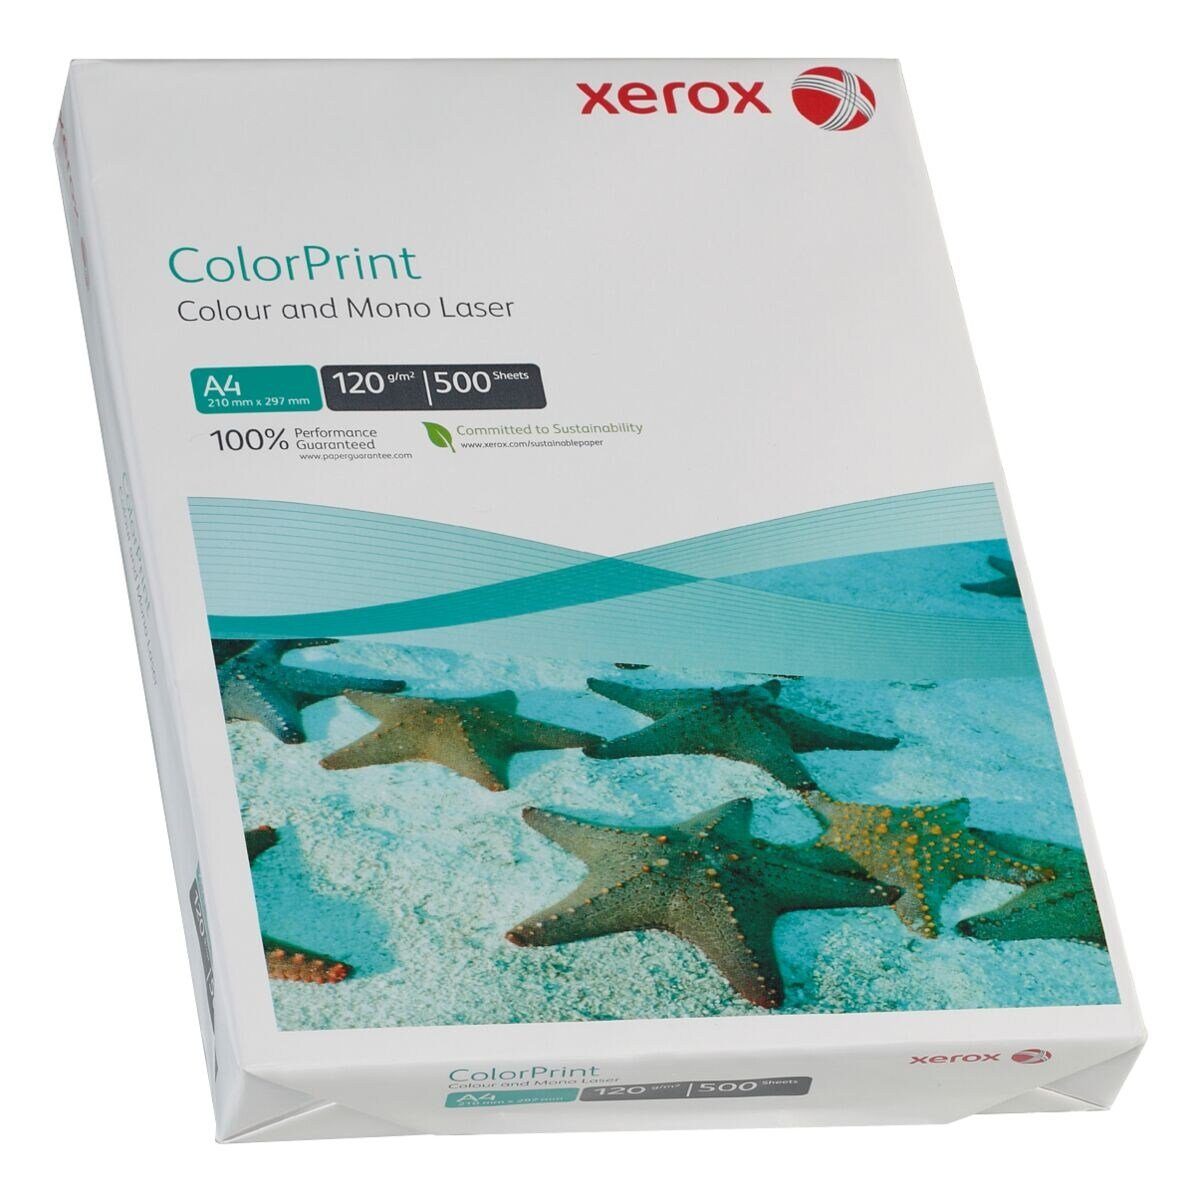 g/m², Blatt 120 Format 171 Xerox DIN ColorPrint, 500 CIE, A4, Farblaser-Druckerpapier